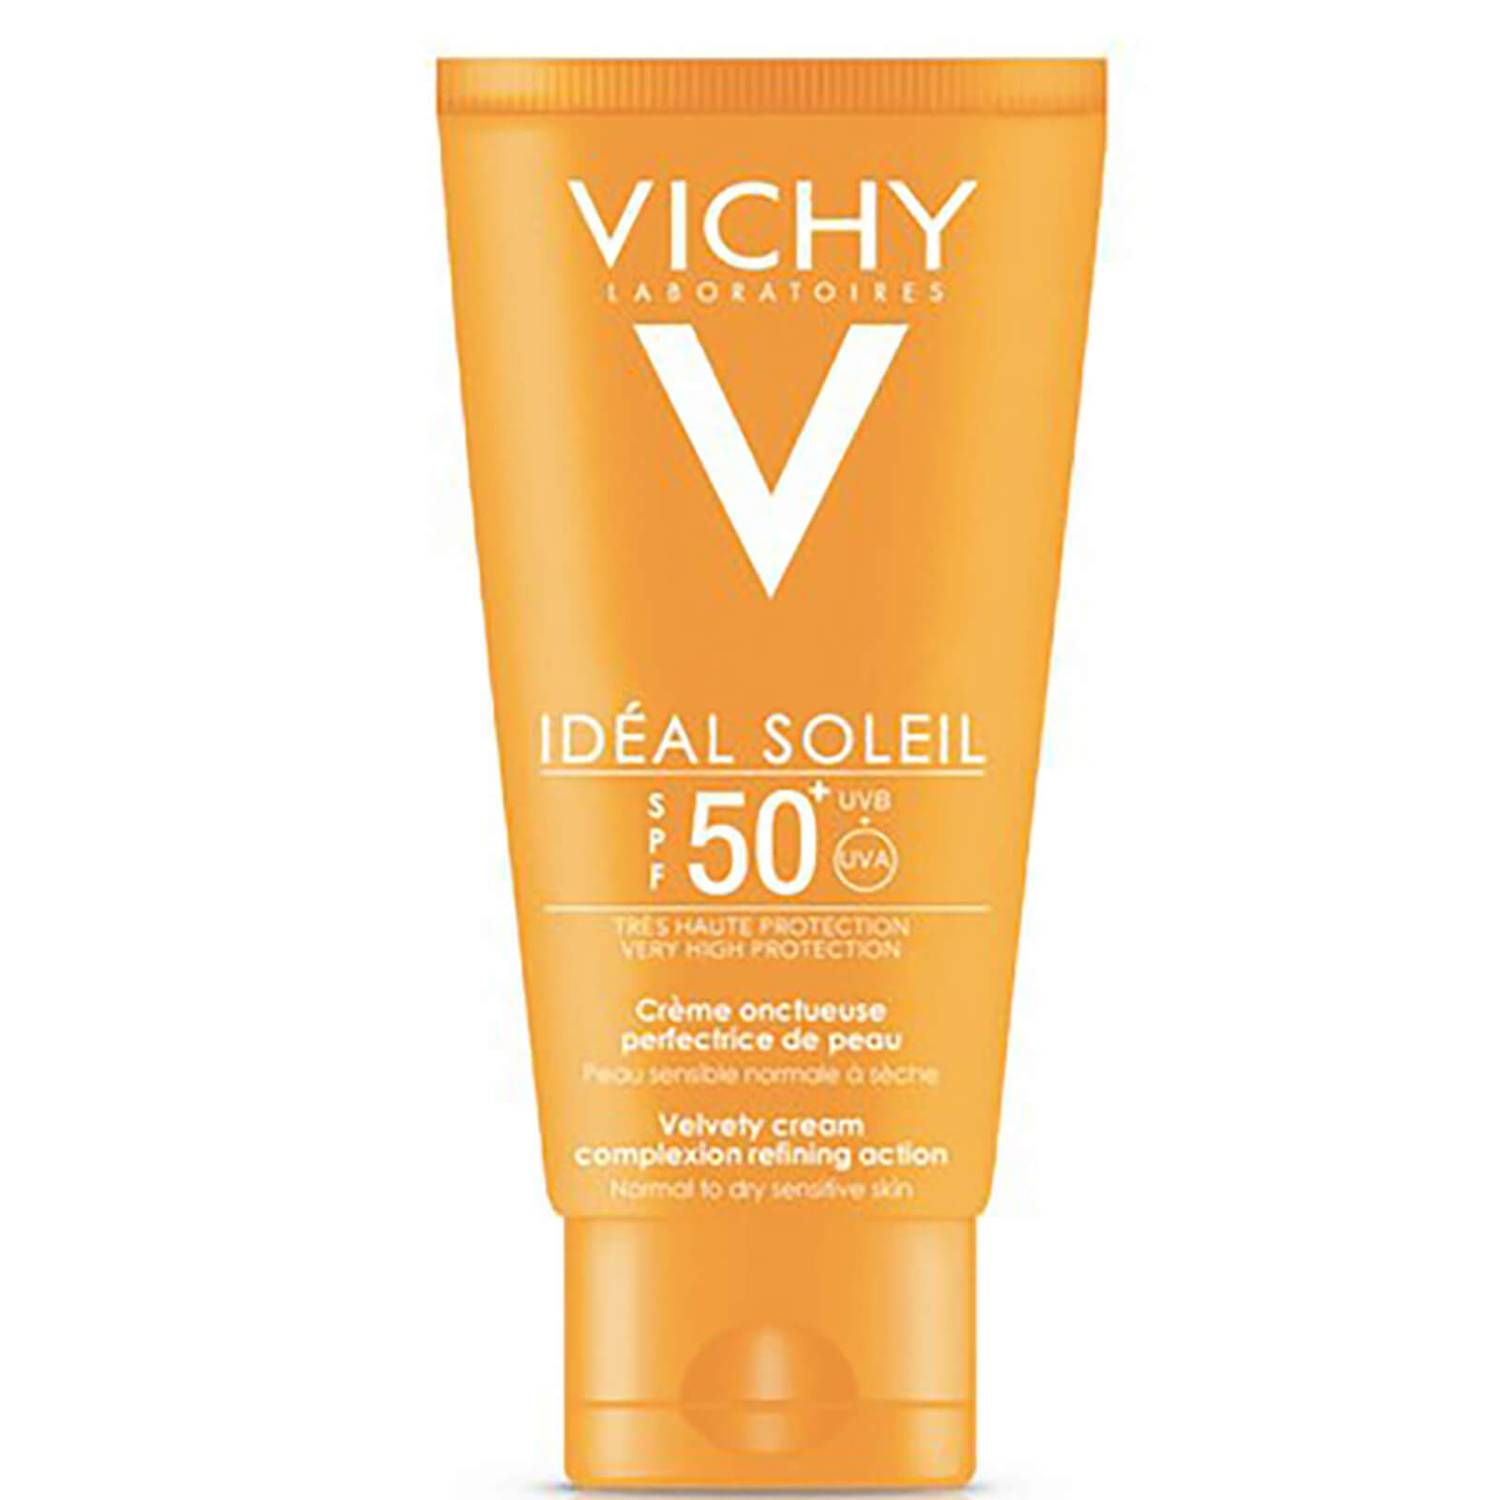 VICHY Idéal Soleil Velvety Cream SPF 50+ 50ml | Look Fantastic (ROW)